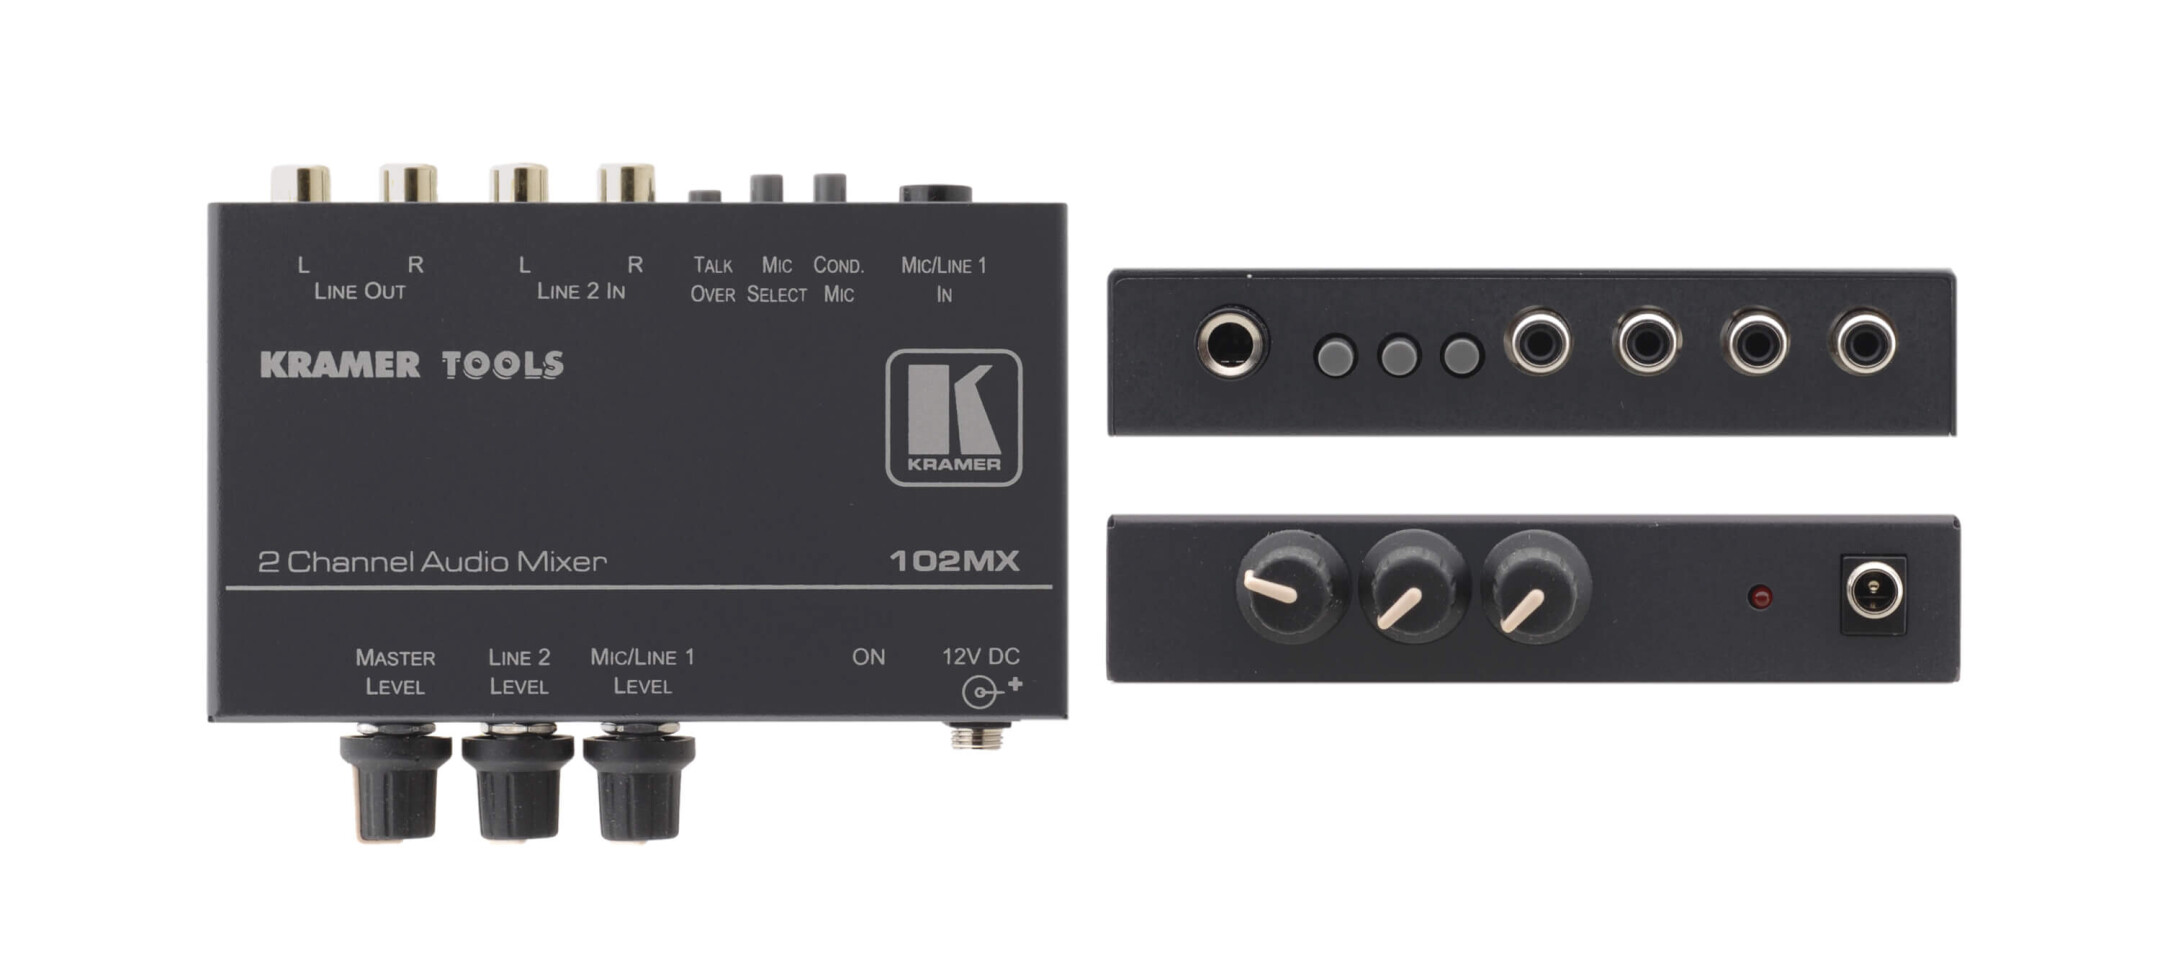 Kramer-102MX2-Channel-Stereo-Audio-Mixer